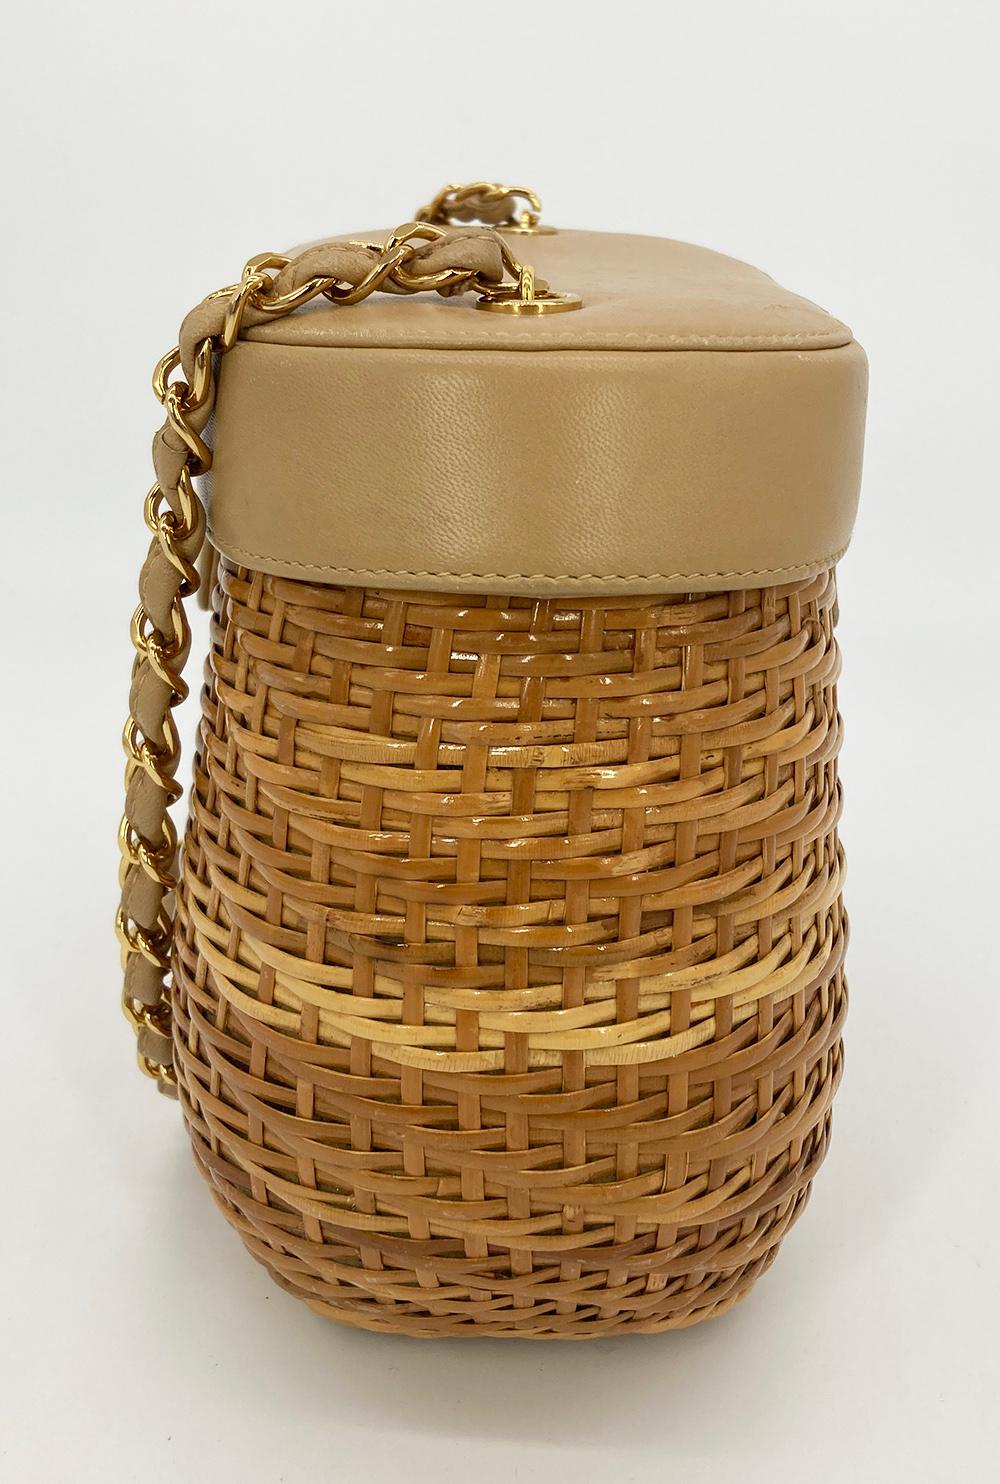 RARE VINTAGE Chanel Wicker Basket Bag 1